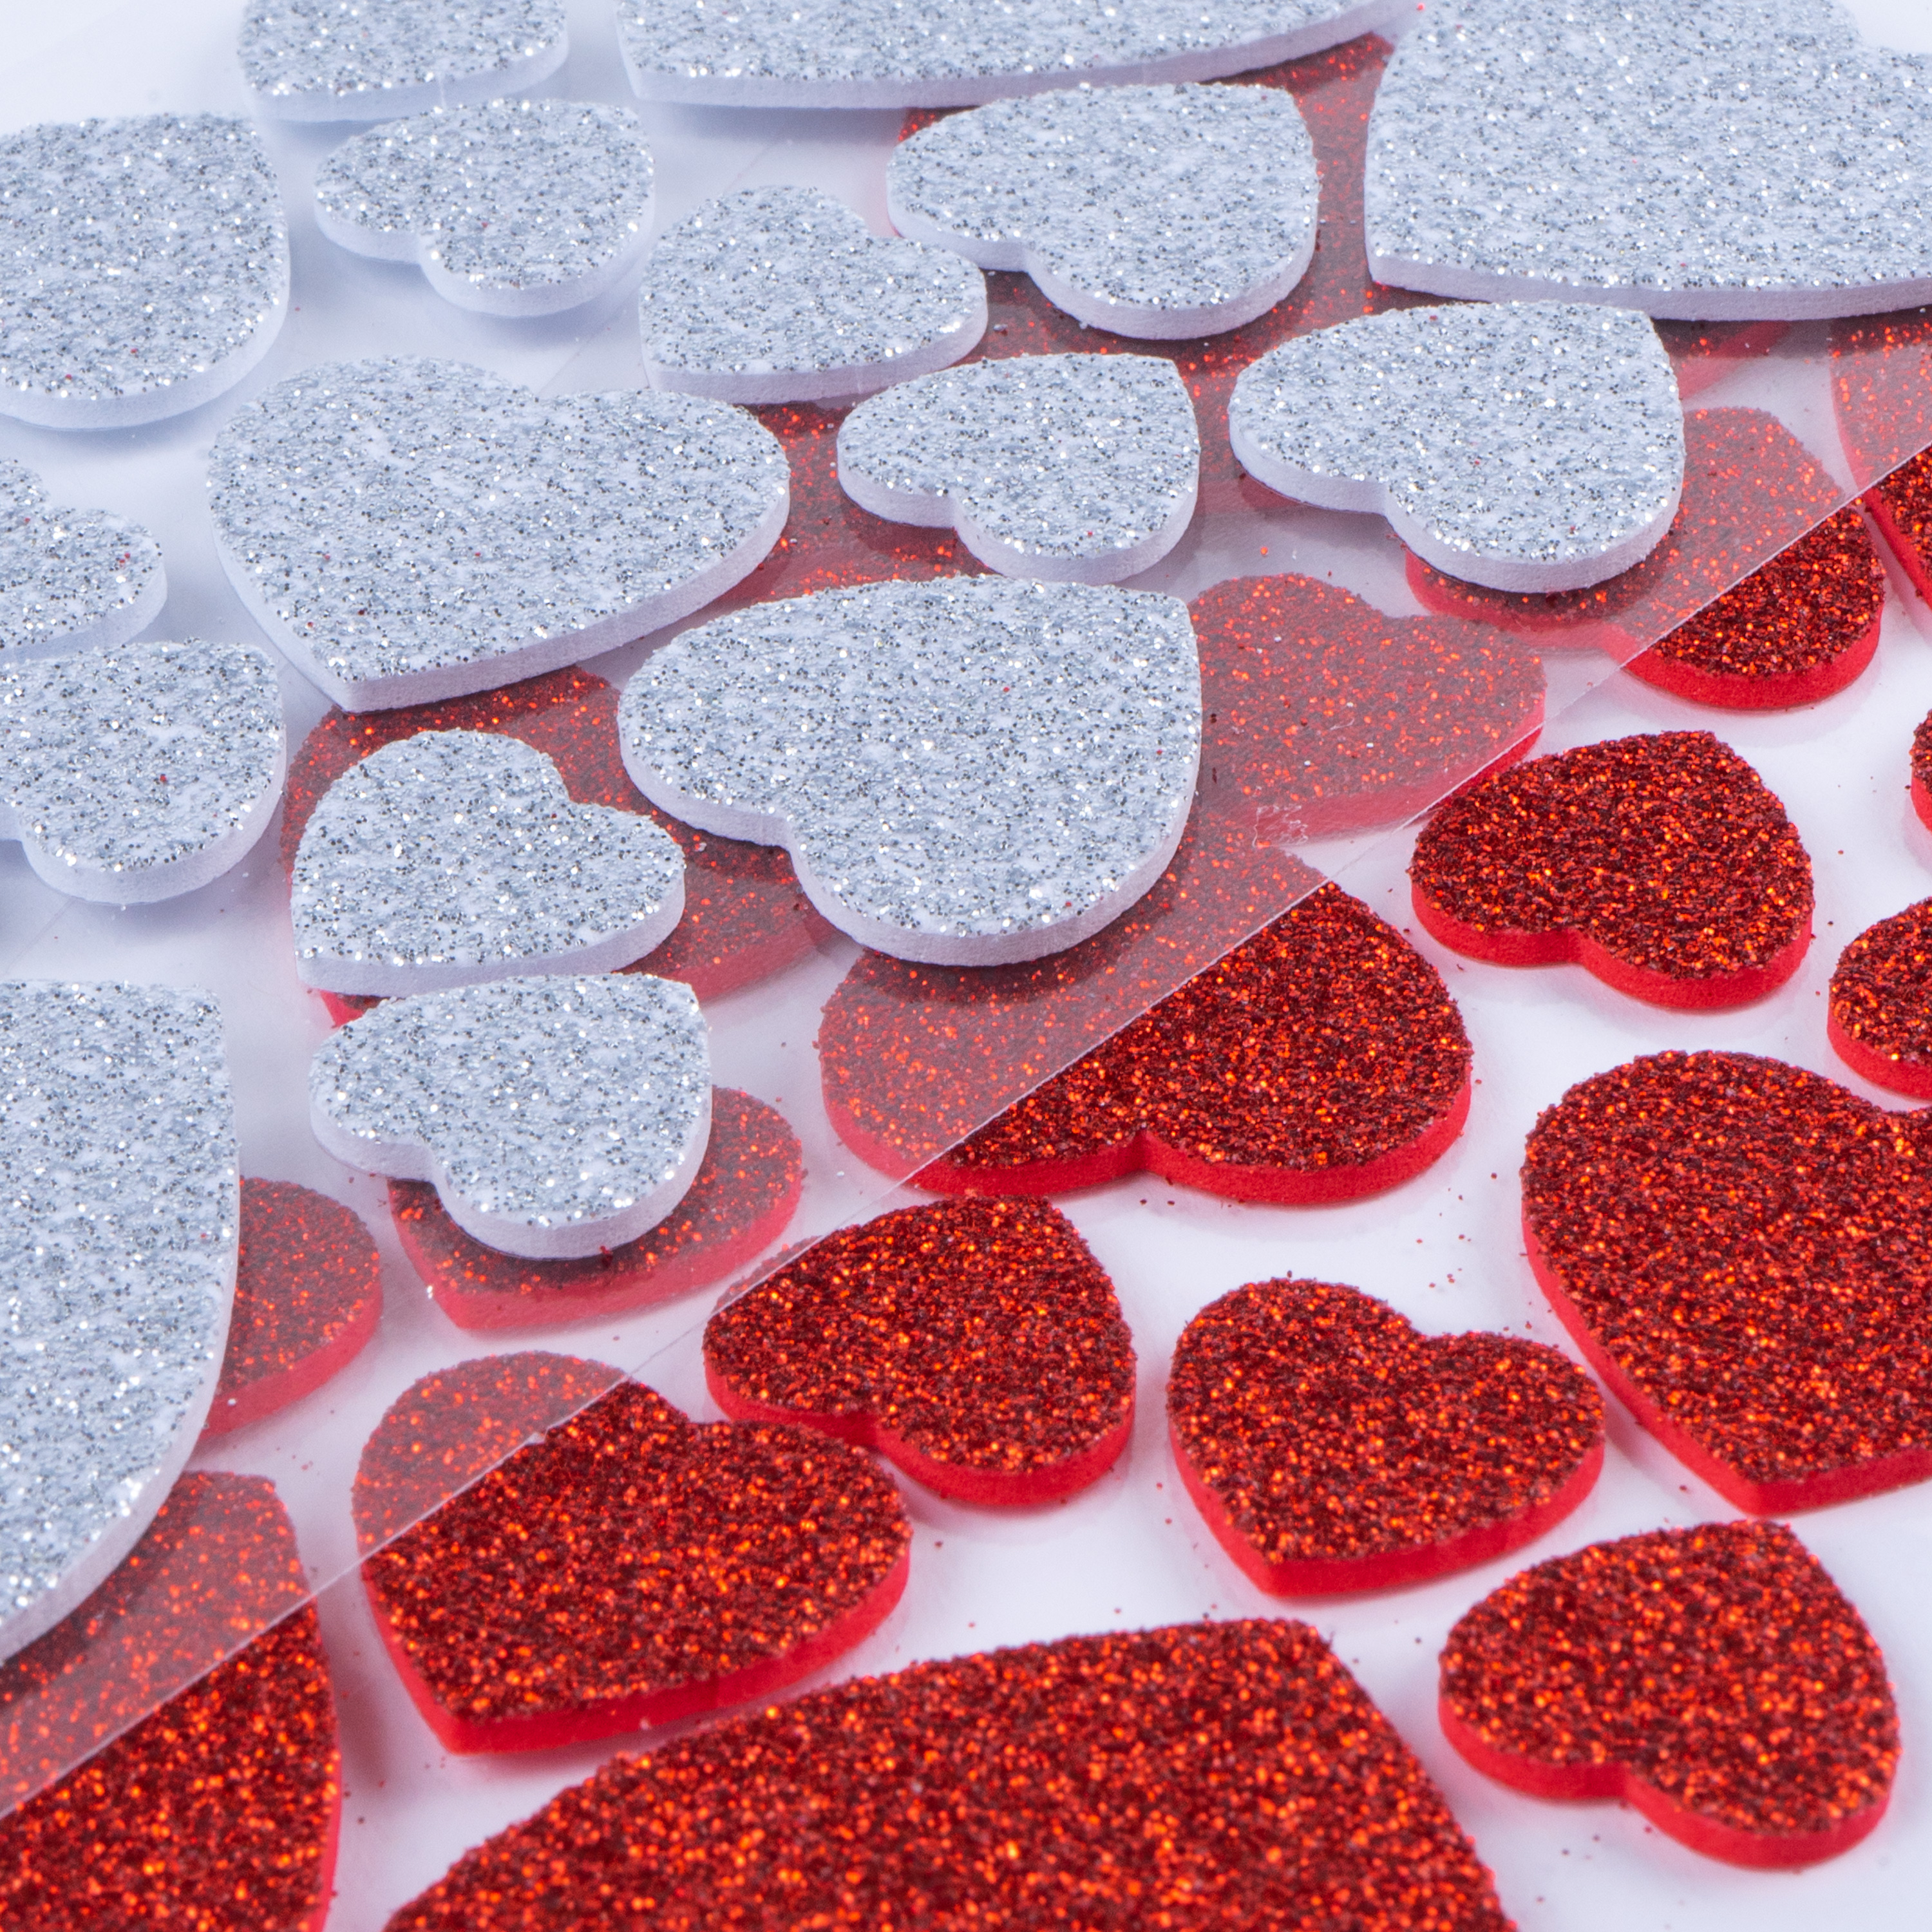 Moosgummi Glitter-Sticker „Herzen, rot & silber“, 40 Sticker